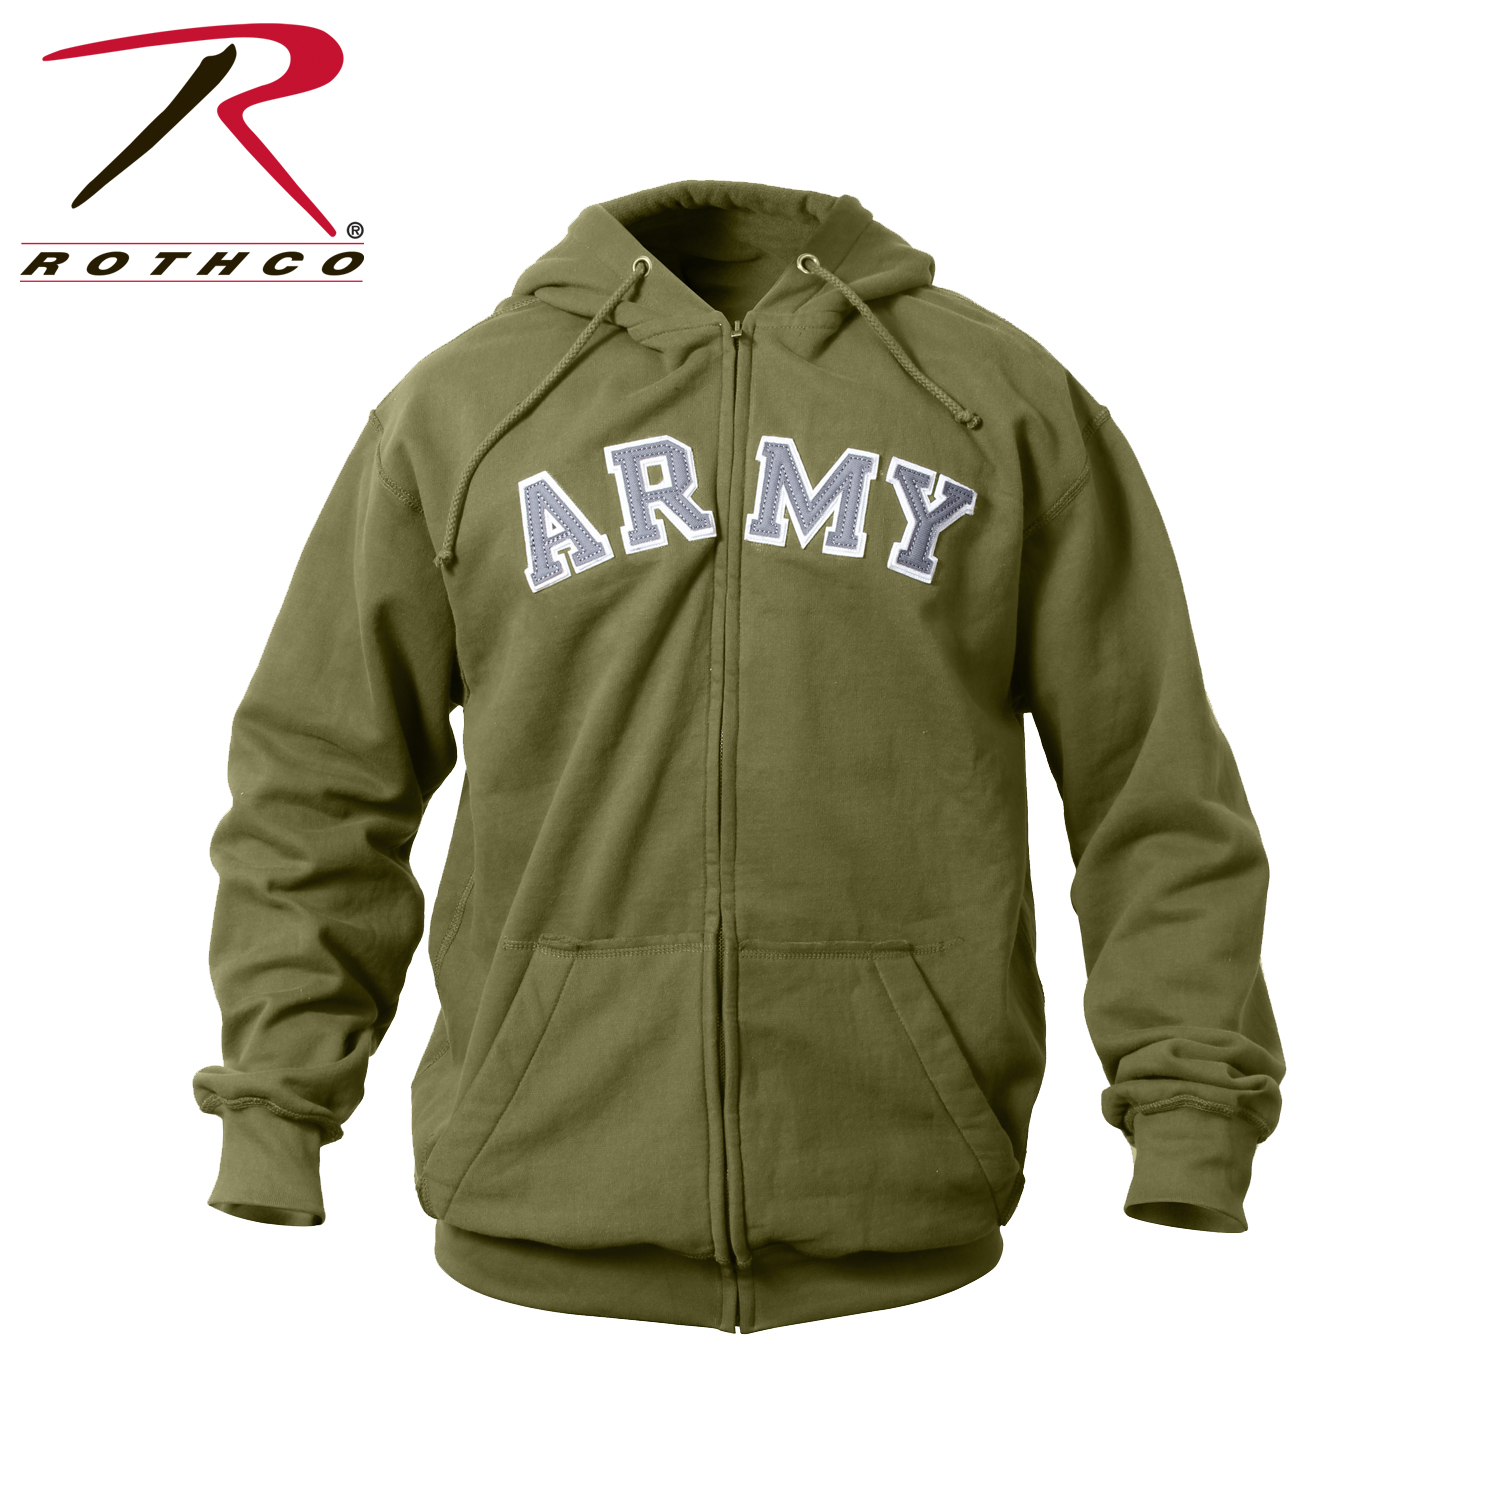 Rothco Vintage Army Zipper Hooded Sweatshirt